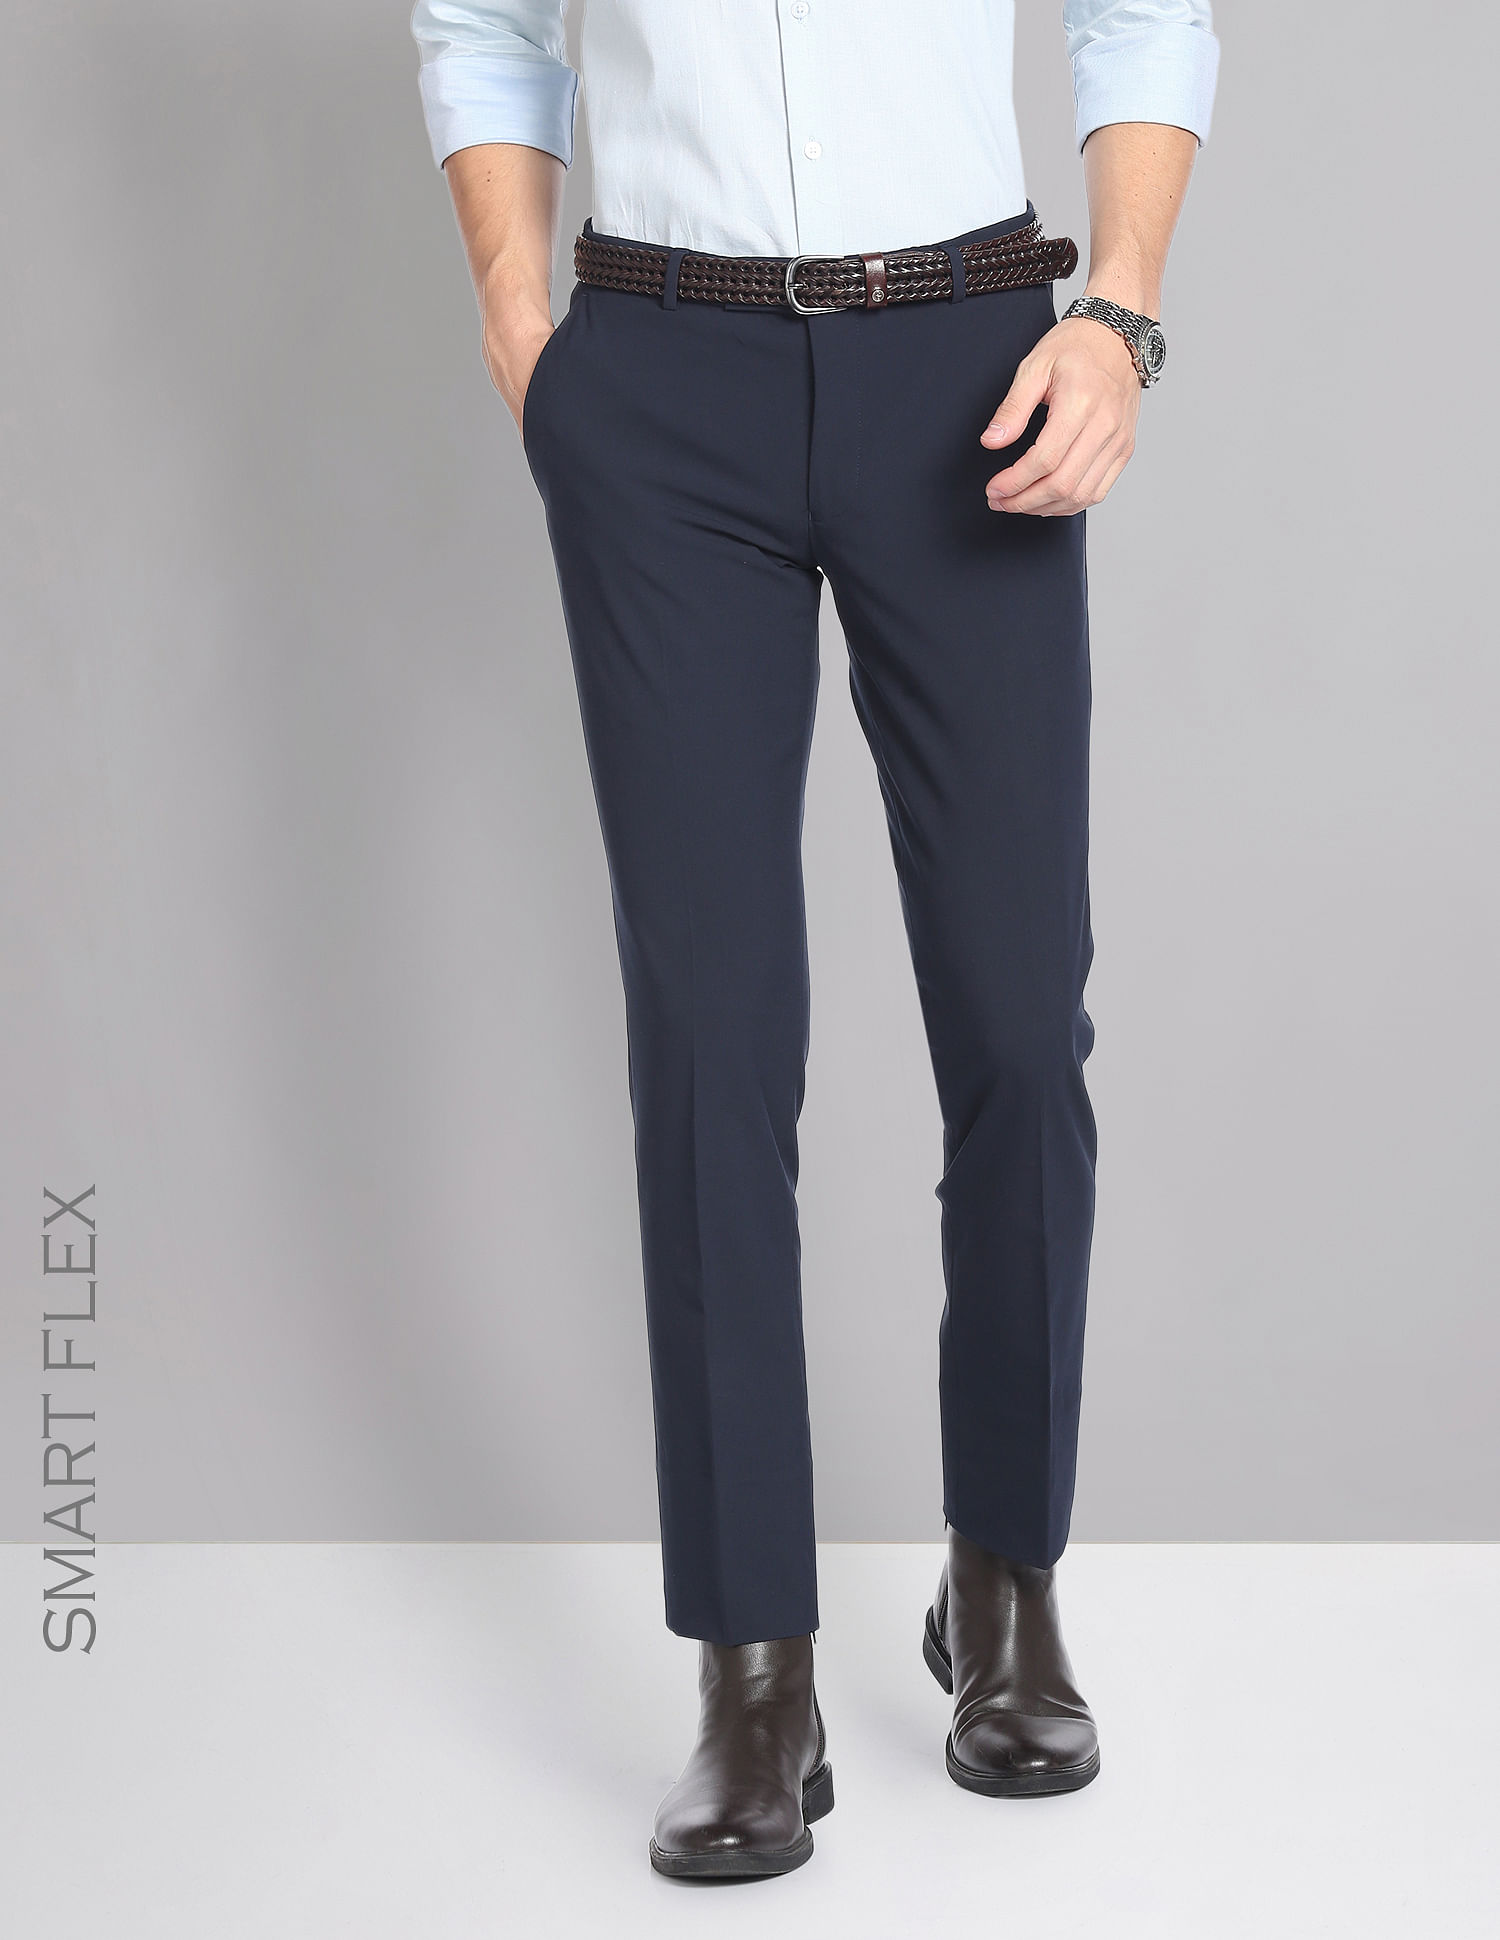 Buy Cliths Mens Black Formal Pants Slim Fit Formal Trousers  BlackCLTR13BBlack28 at Amazonin